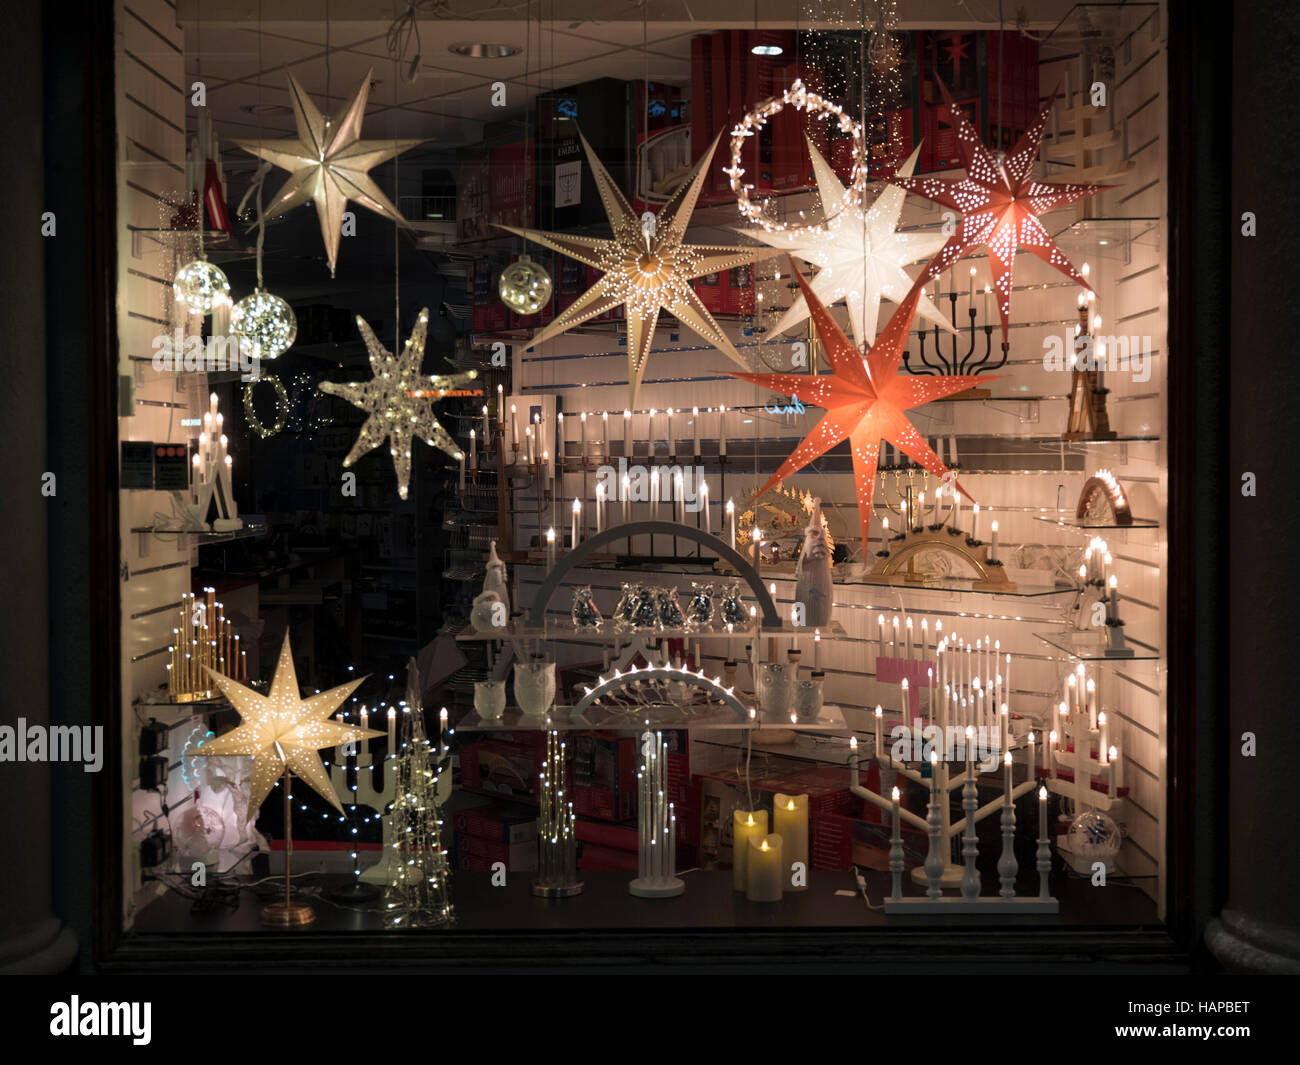 Weihnachtsbeleuchtung in Shop Schaufenster, Bergen, Norwegen  Stockfotografie - Alamy